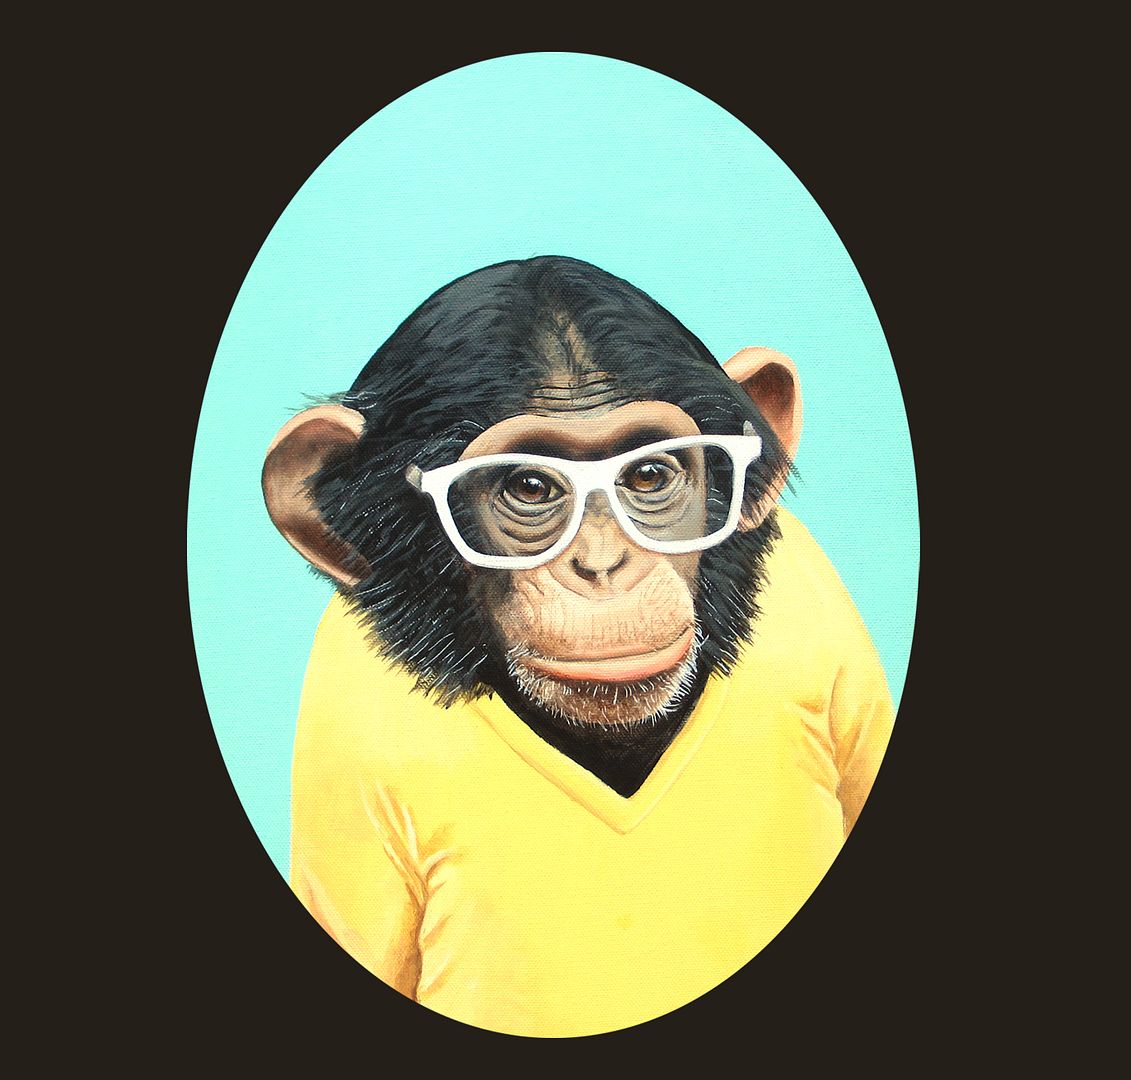  photo monkey-portrait-3_zpsc39d886f.jpg